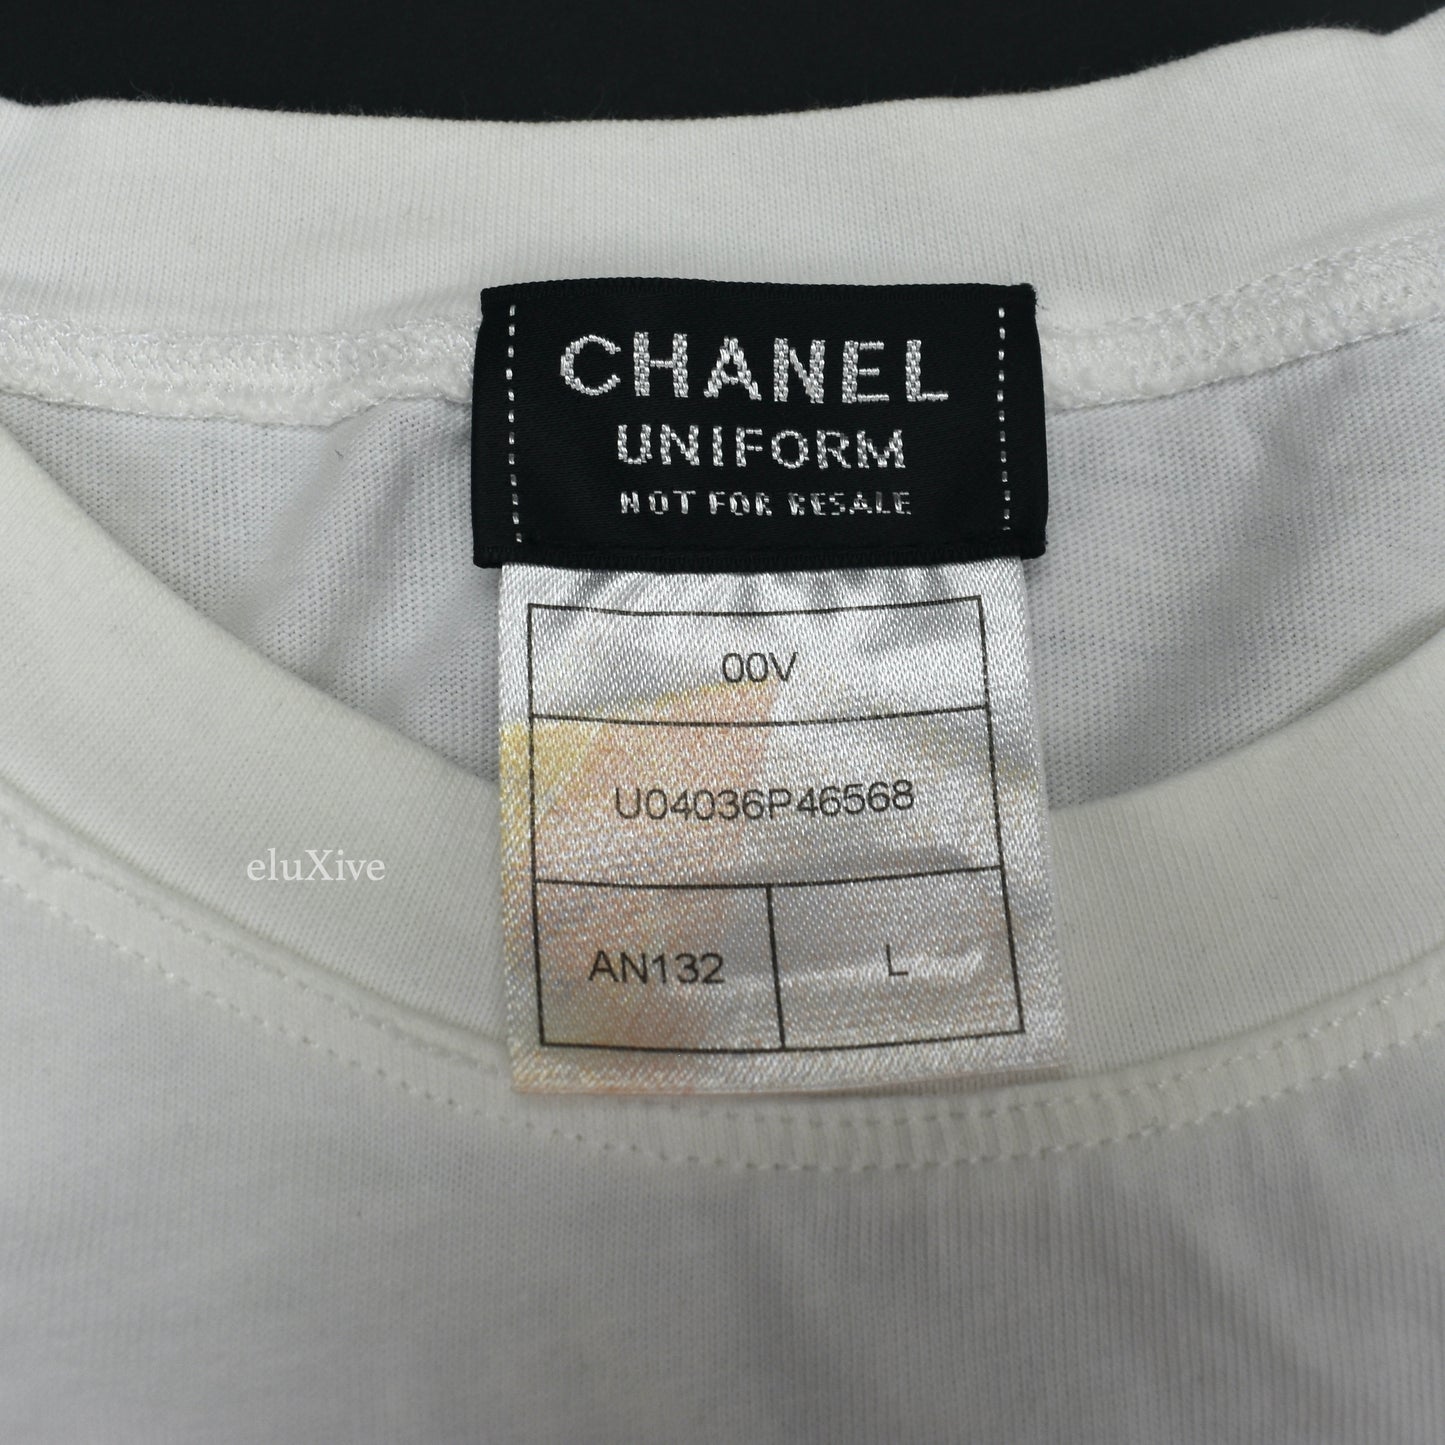 Vintage Chanel Uniform vintage tee t shirt